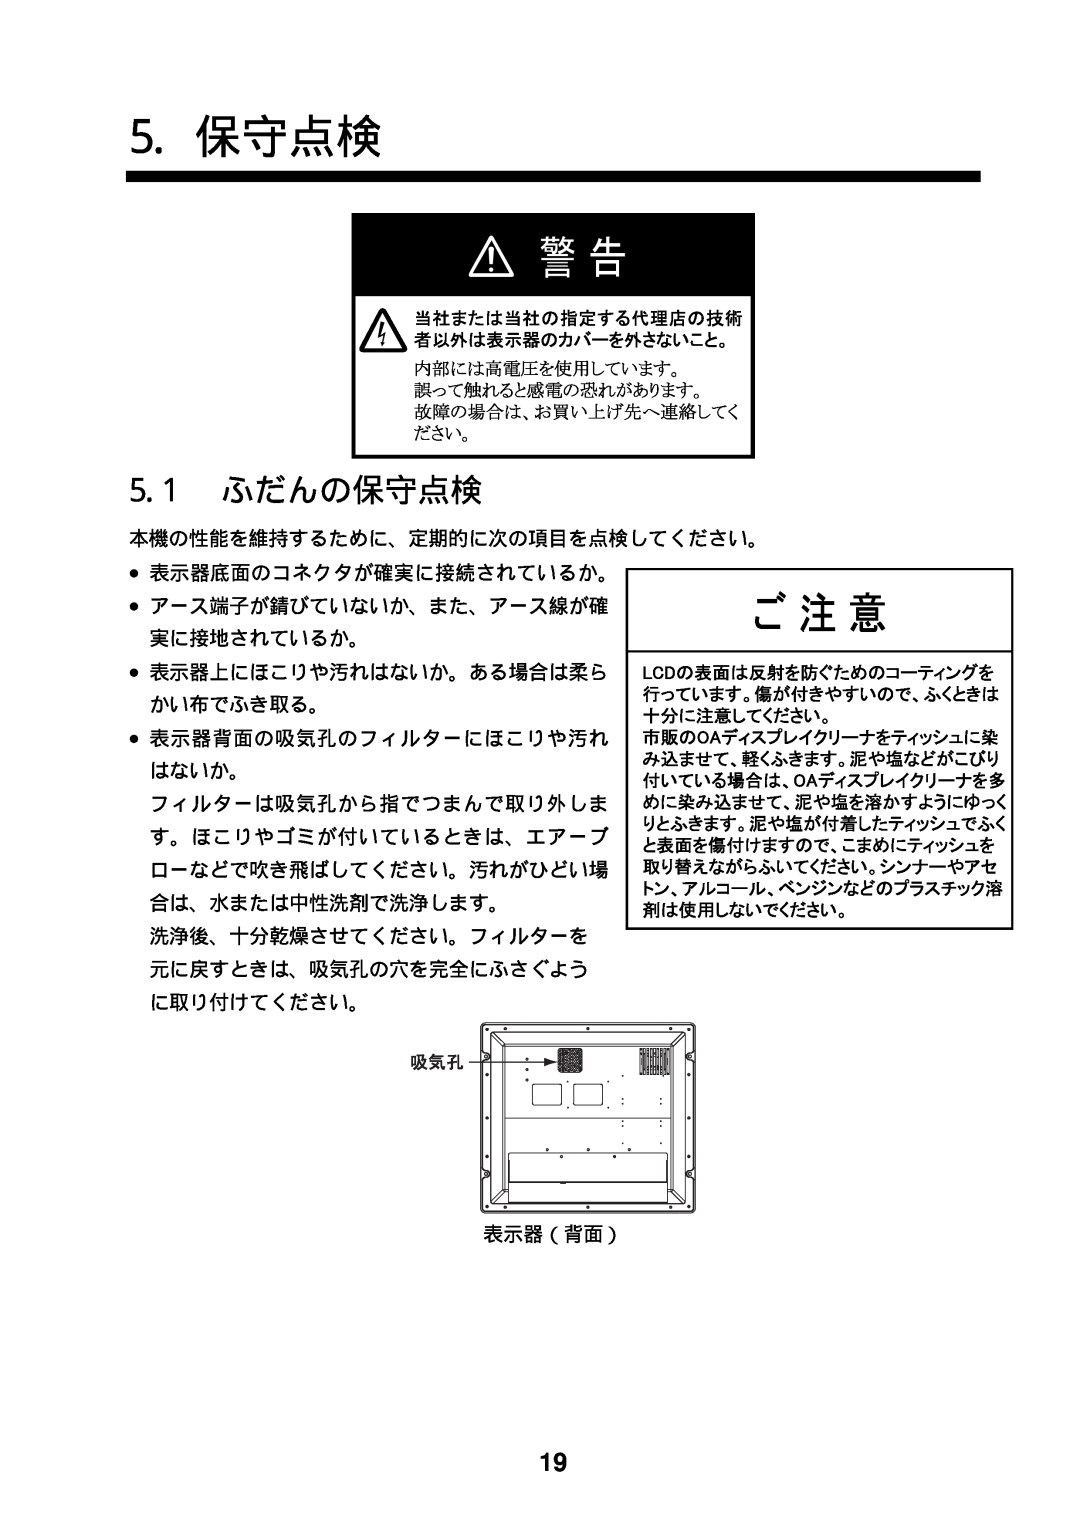 Furuno MU-170C manual 5. 保守点検, 5.1 ふだんの保守点検, 本機の性能を維持するために、定期的に次の項目を点検してください。 表示器底面のコネクタが確実に接続されているか。, 表示器（背面） 